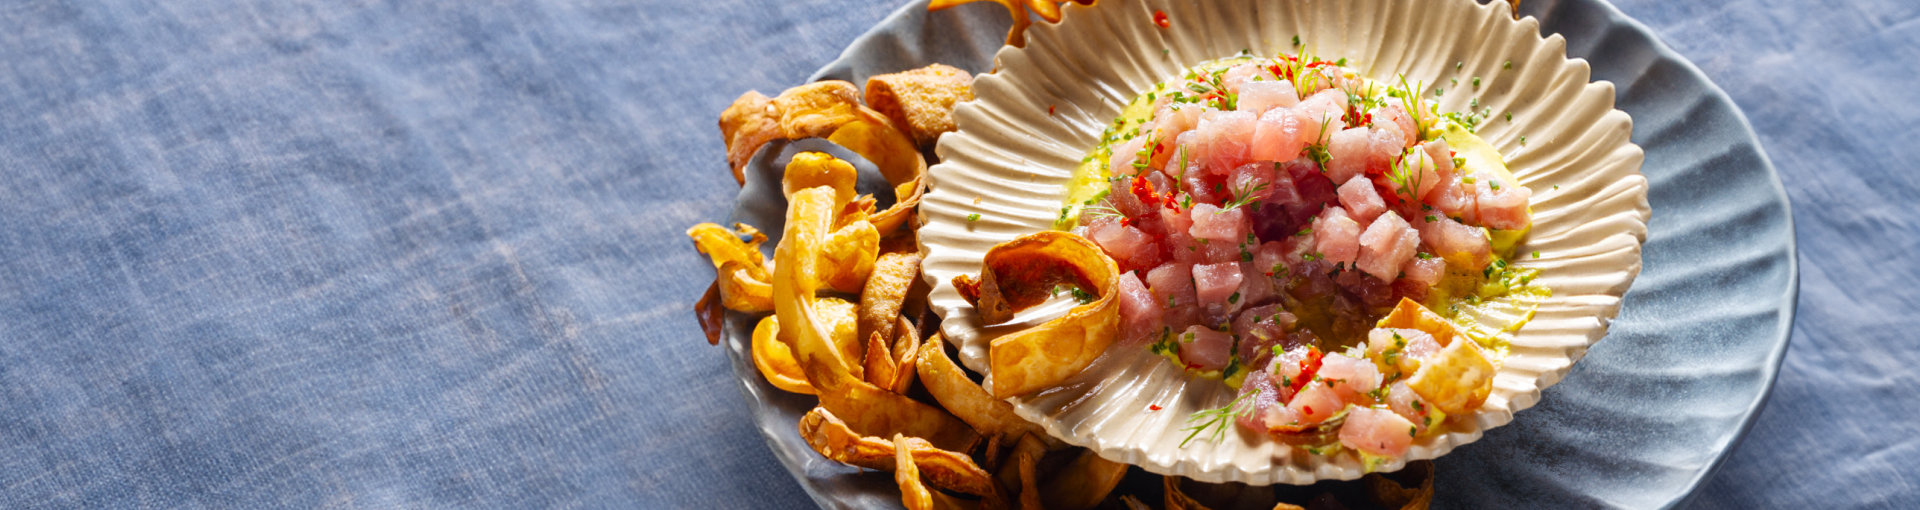 Cape Malay-Inspired Tuna with Crispy Tortilla Chips by Lorna Masek